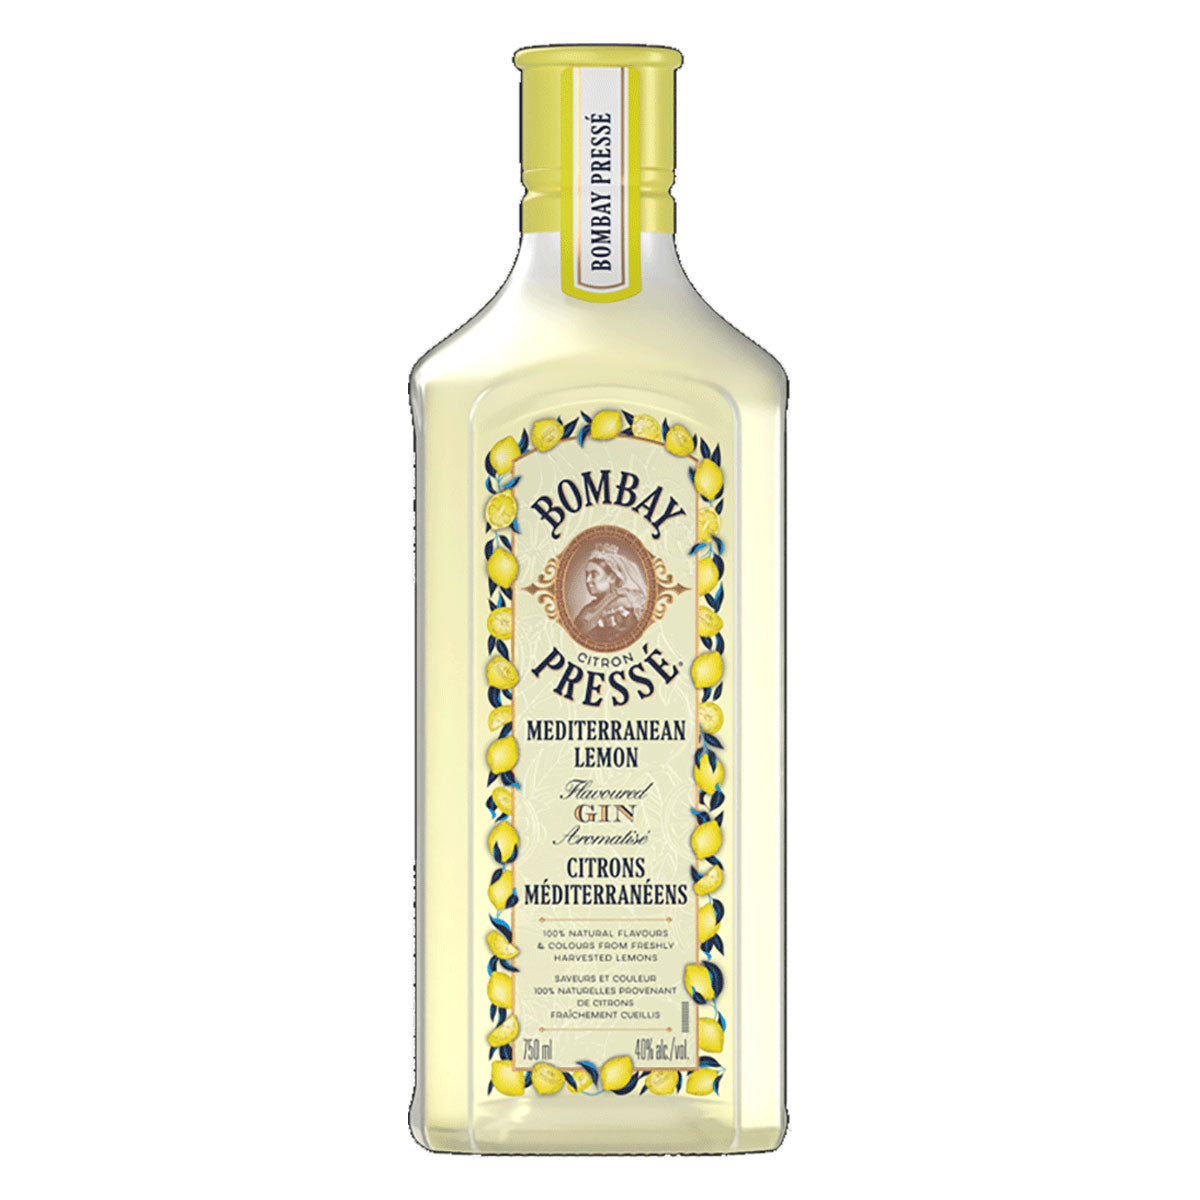 Bombay Presse Citron Mediterranean Lemon Gin 750ml –